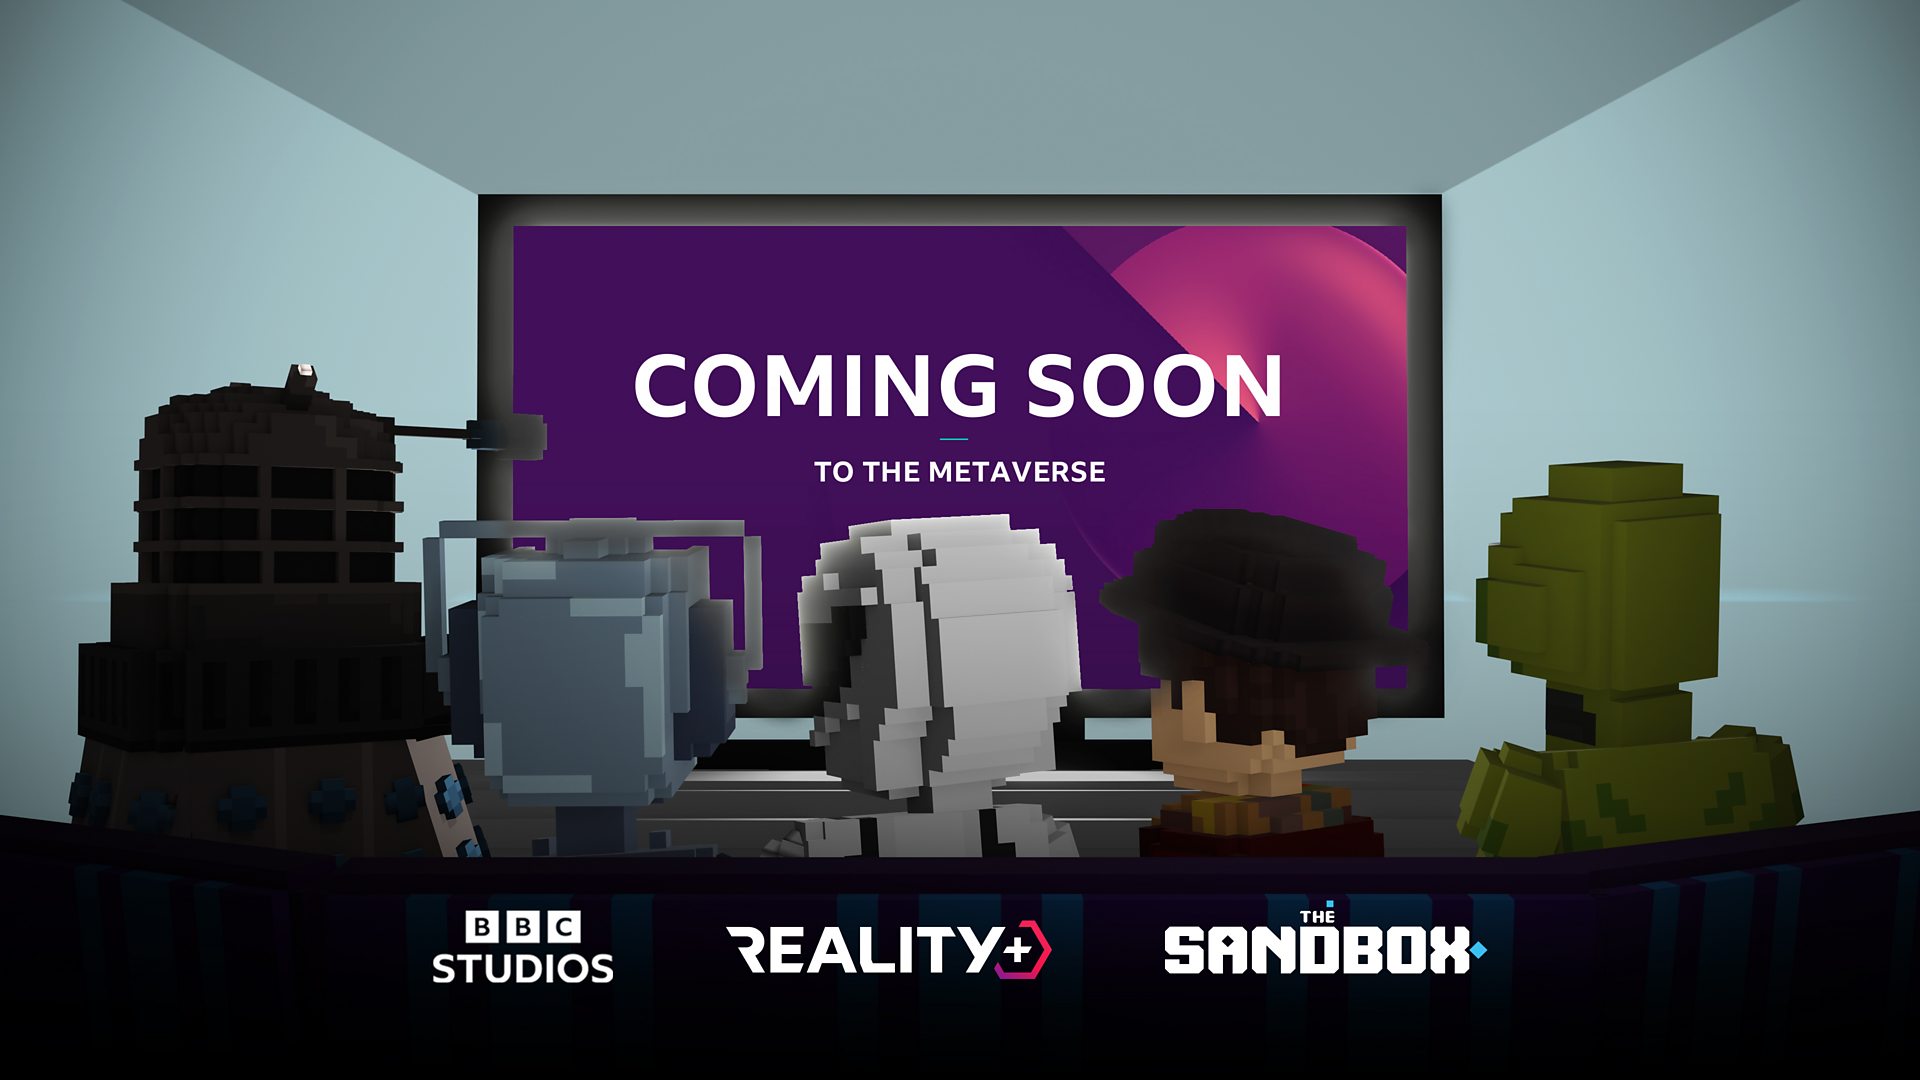 BBC Studios Joins Reality+ To Unleash Metaverse Experiences